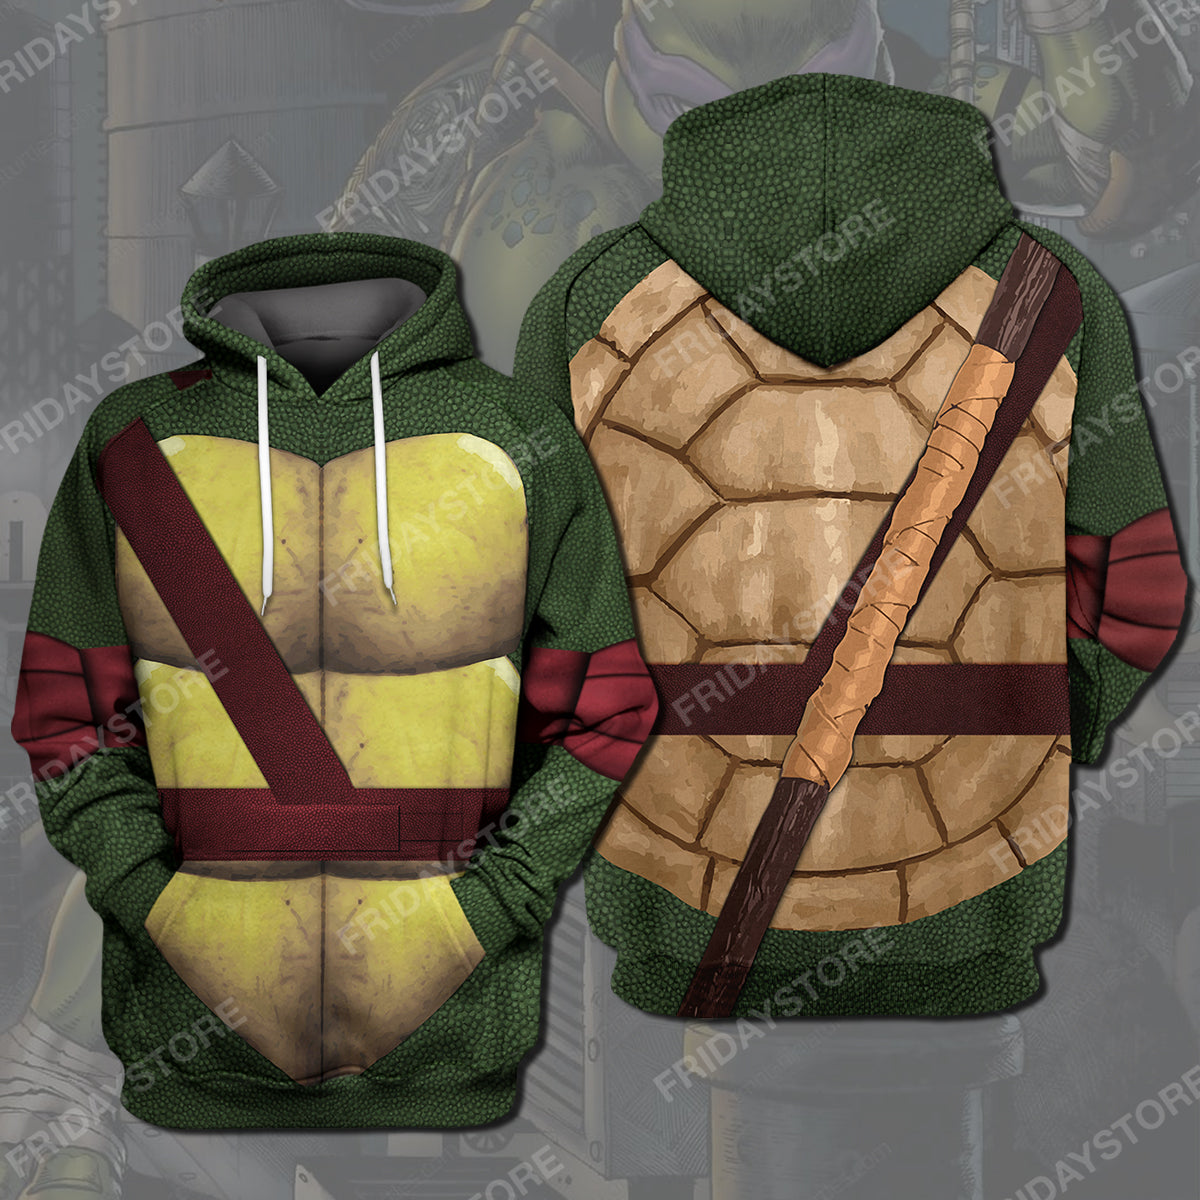 Unifinz TMTN Hoodie Dona Ninja Turtles Costume T-shirt TMNT Shirt Sweater Tank Cool TMNT Cosplay Costume Apparel 2022